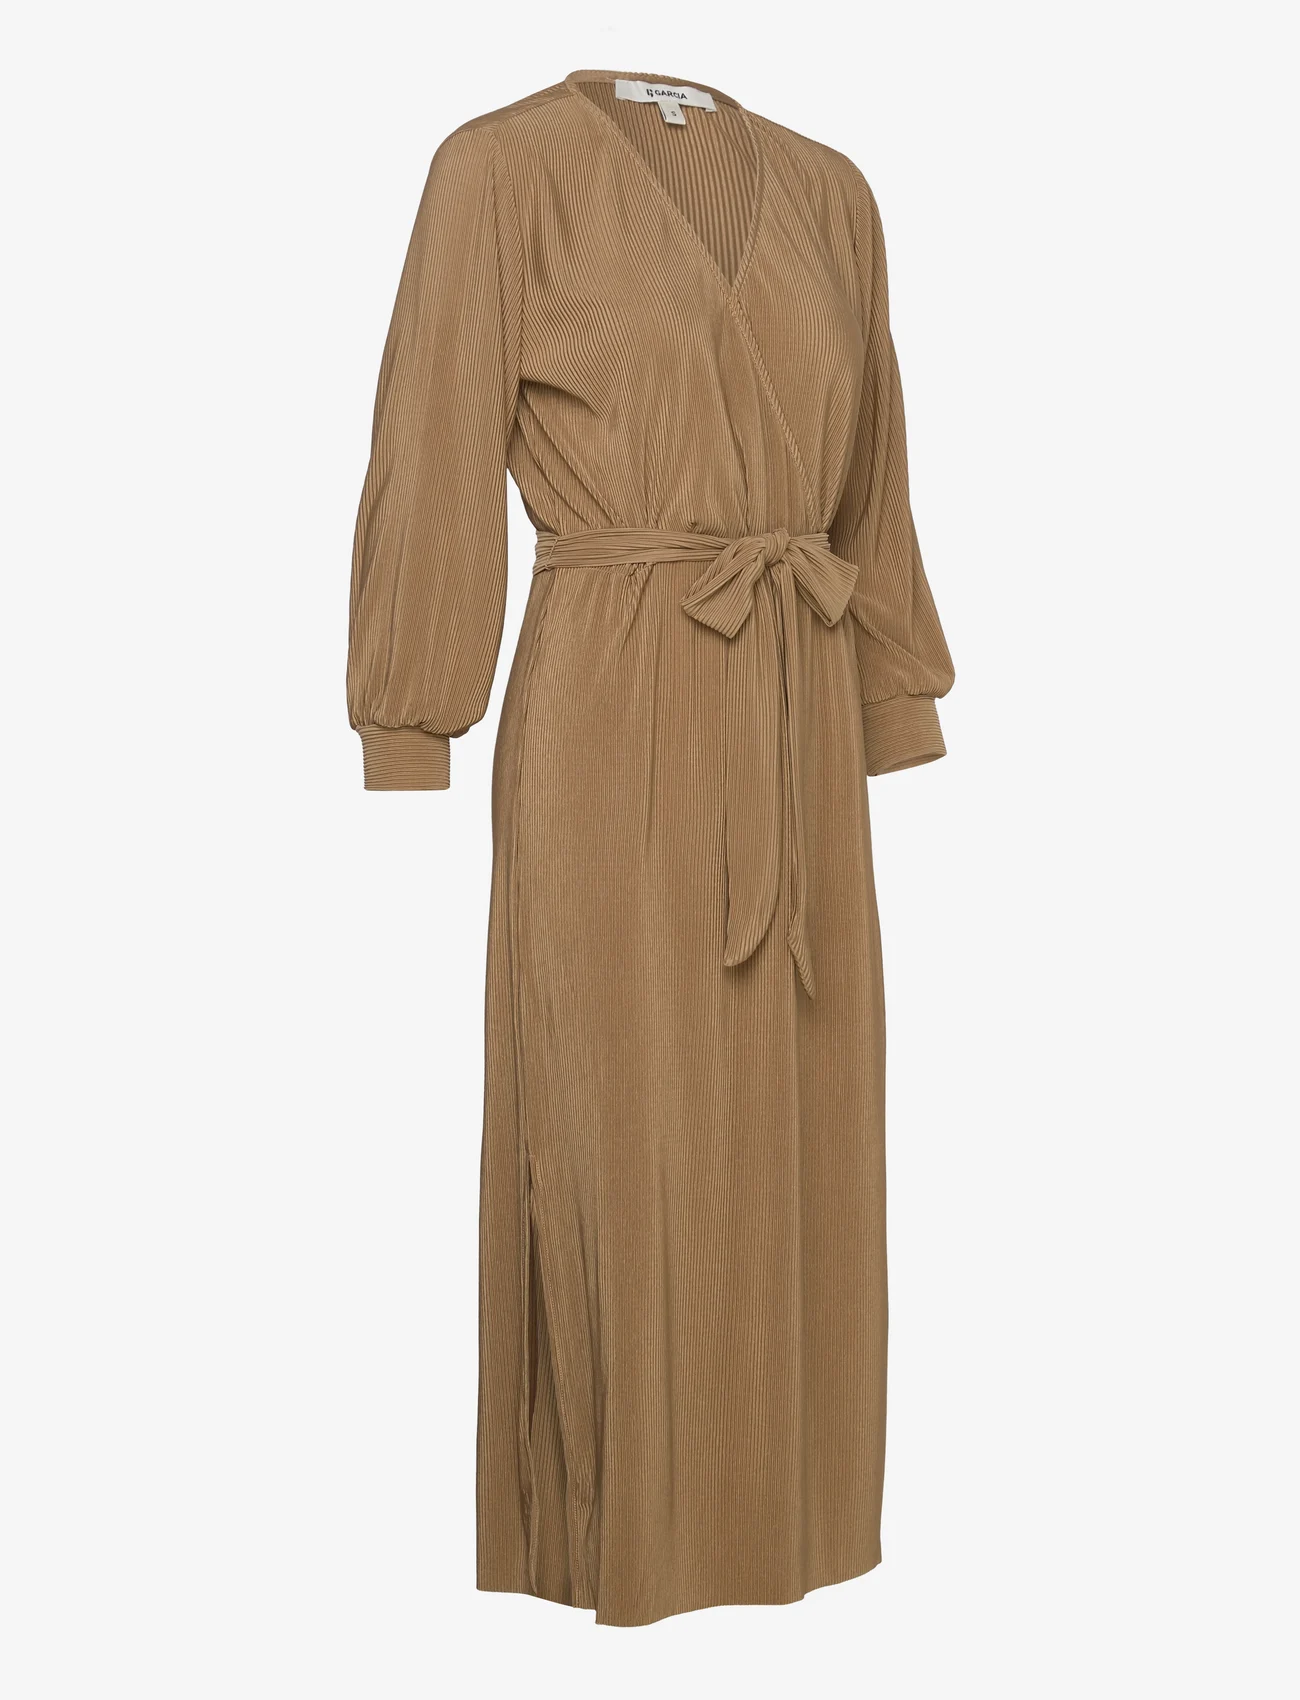 Garcia - ladies dress - wickelkleider - brown - 1